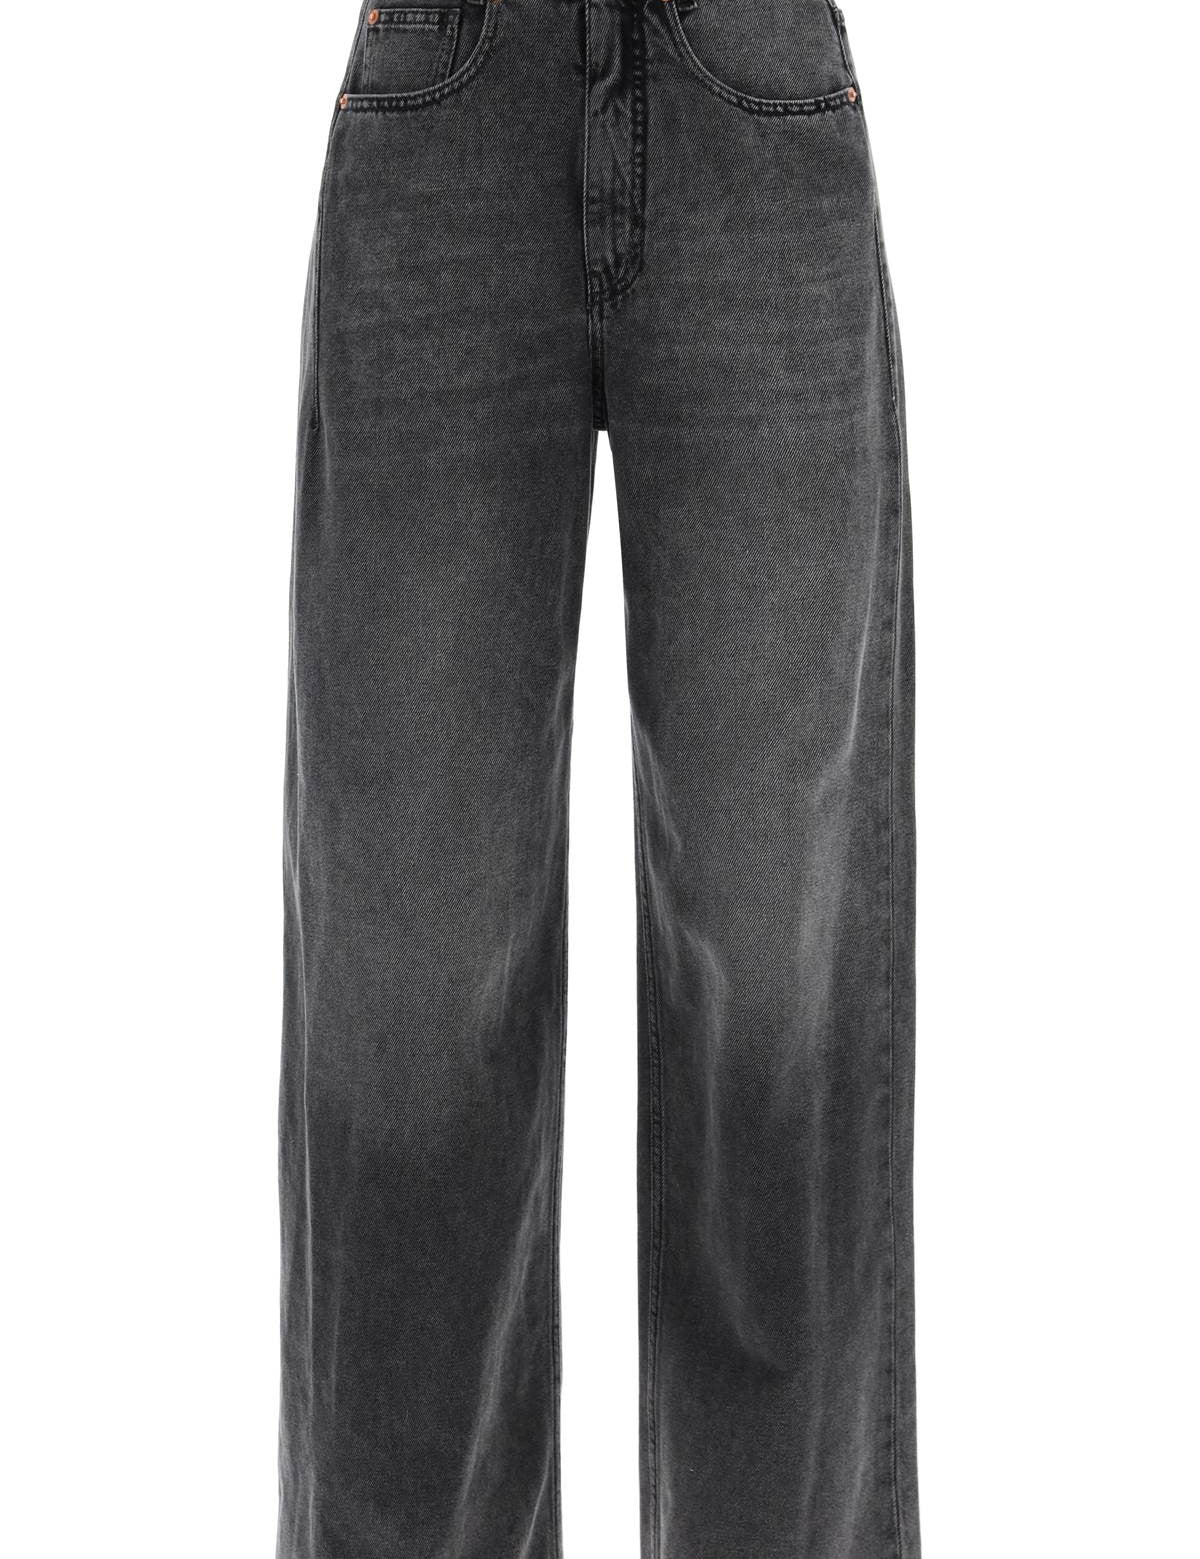 mm6-maison-margiela-hybrid-panel-jeans-with-seven.jpg